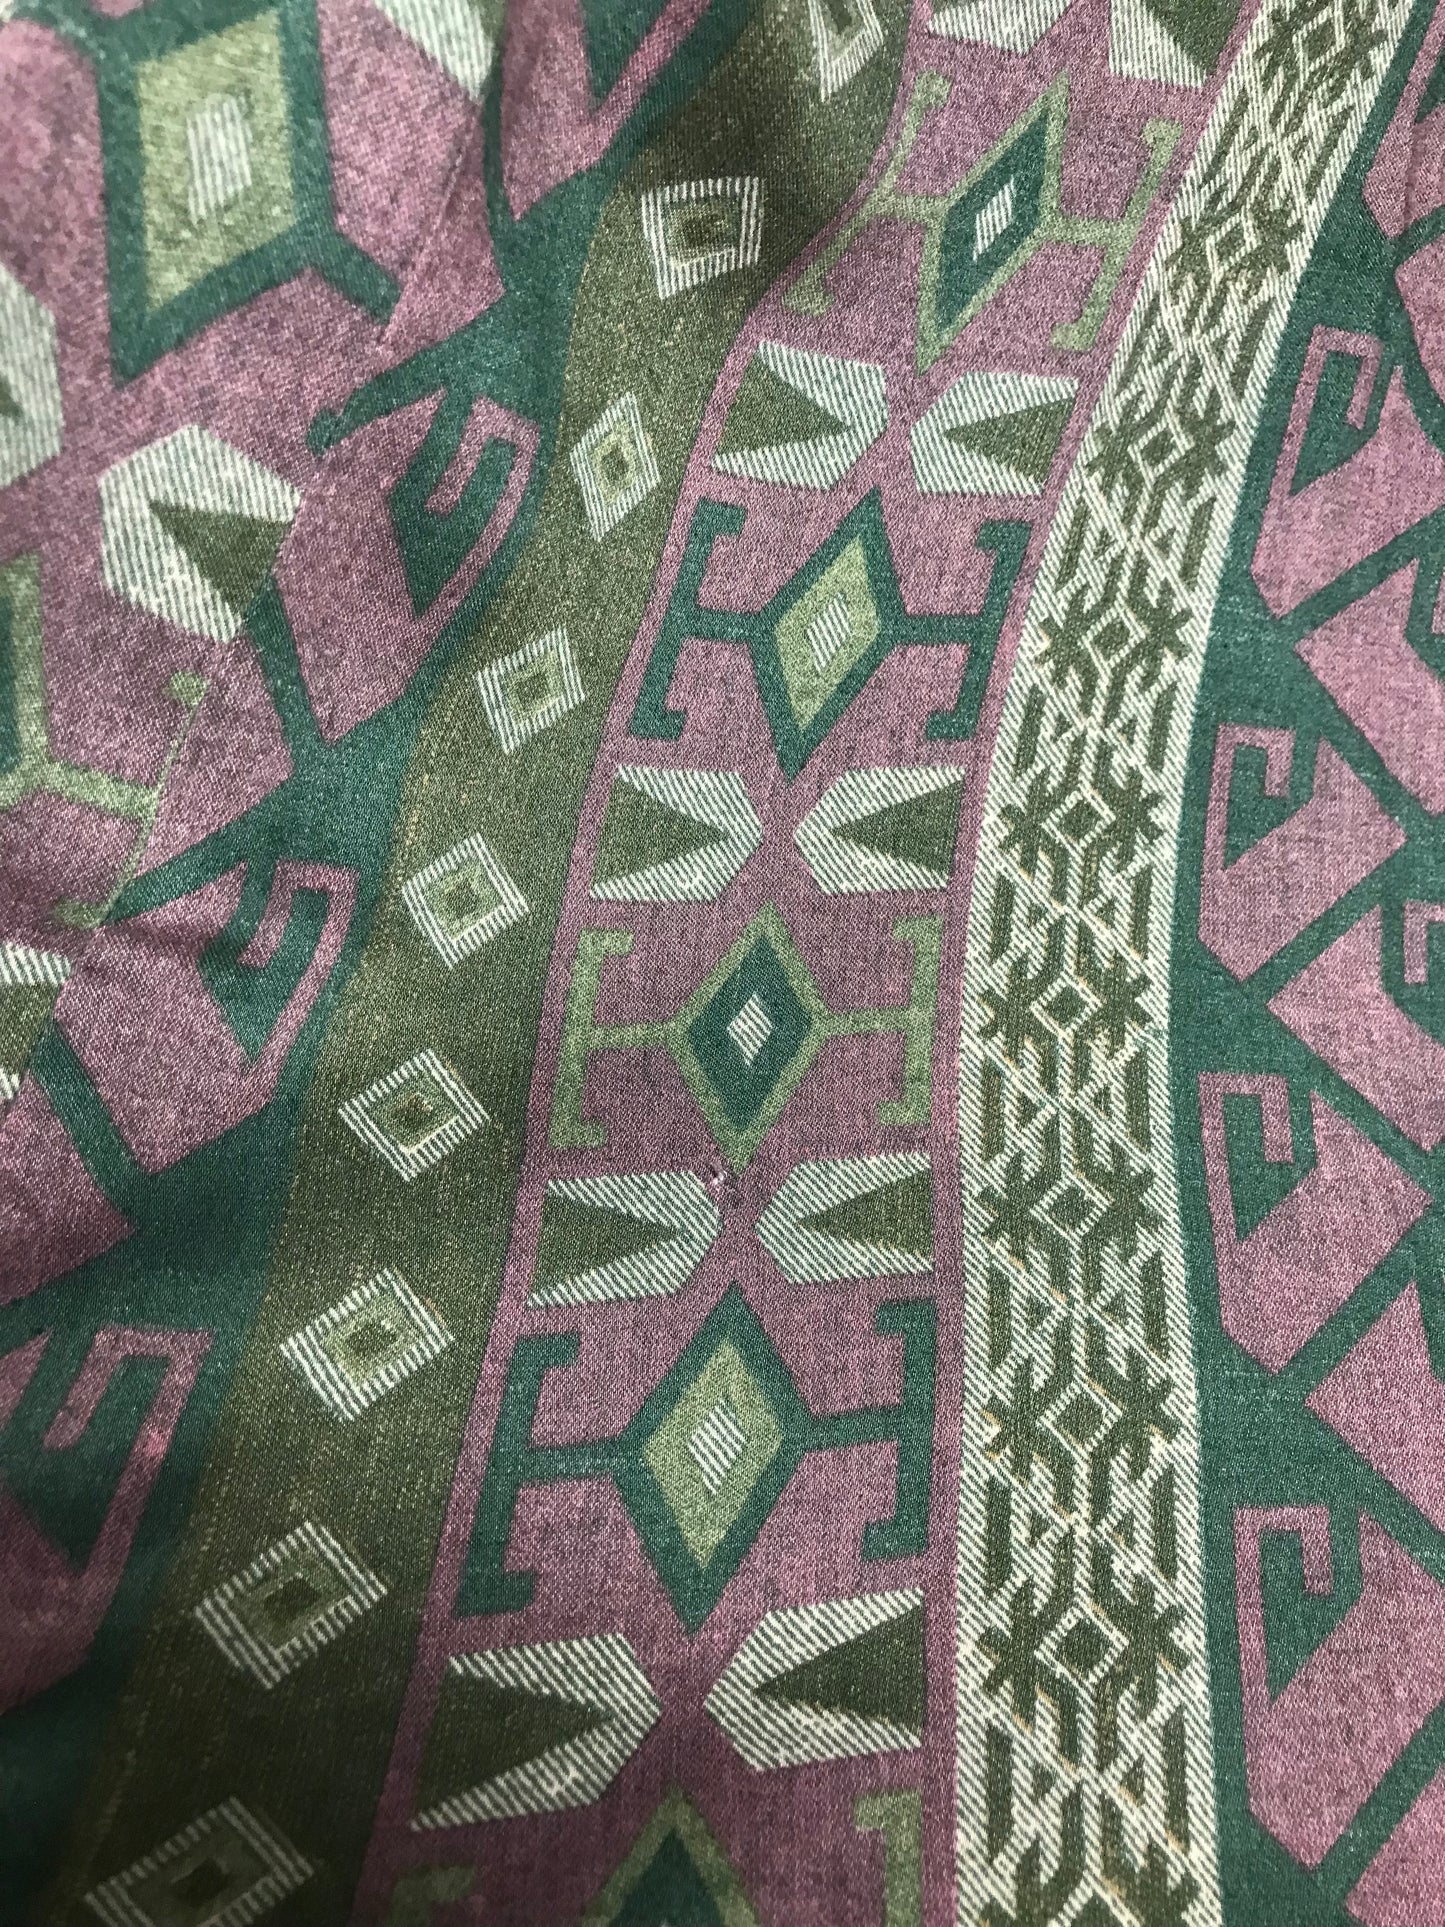 Vinyage Native Dress [H24810]